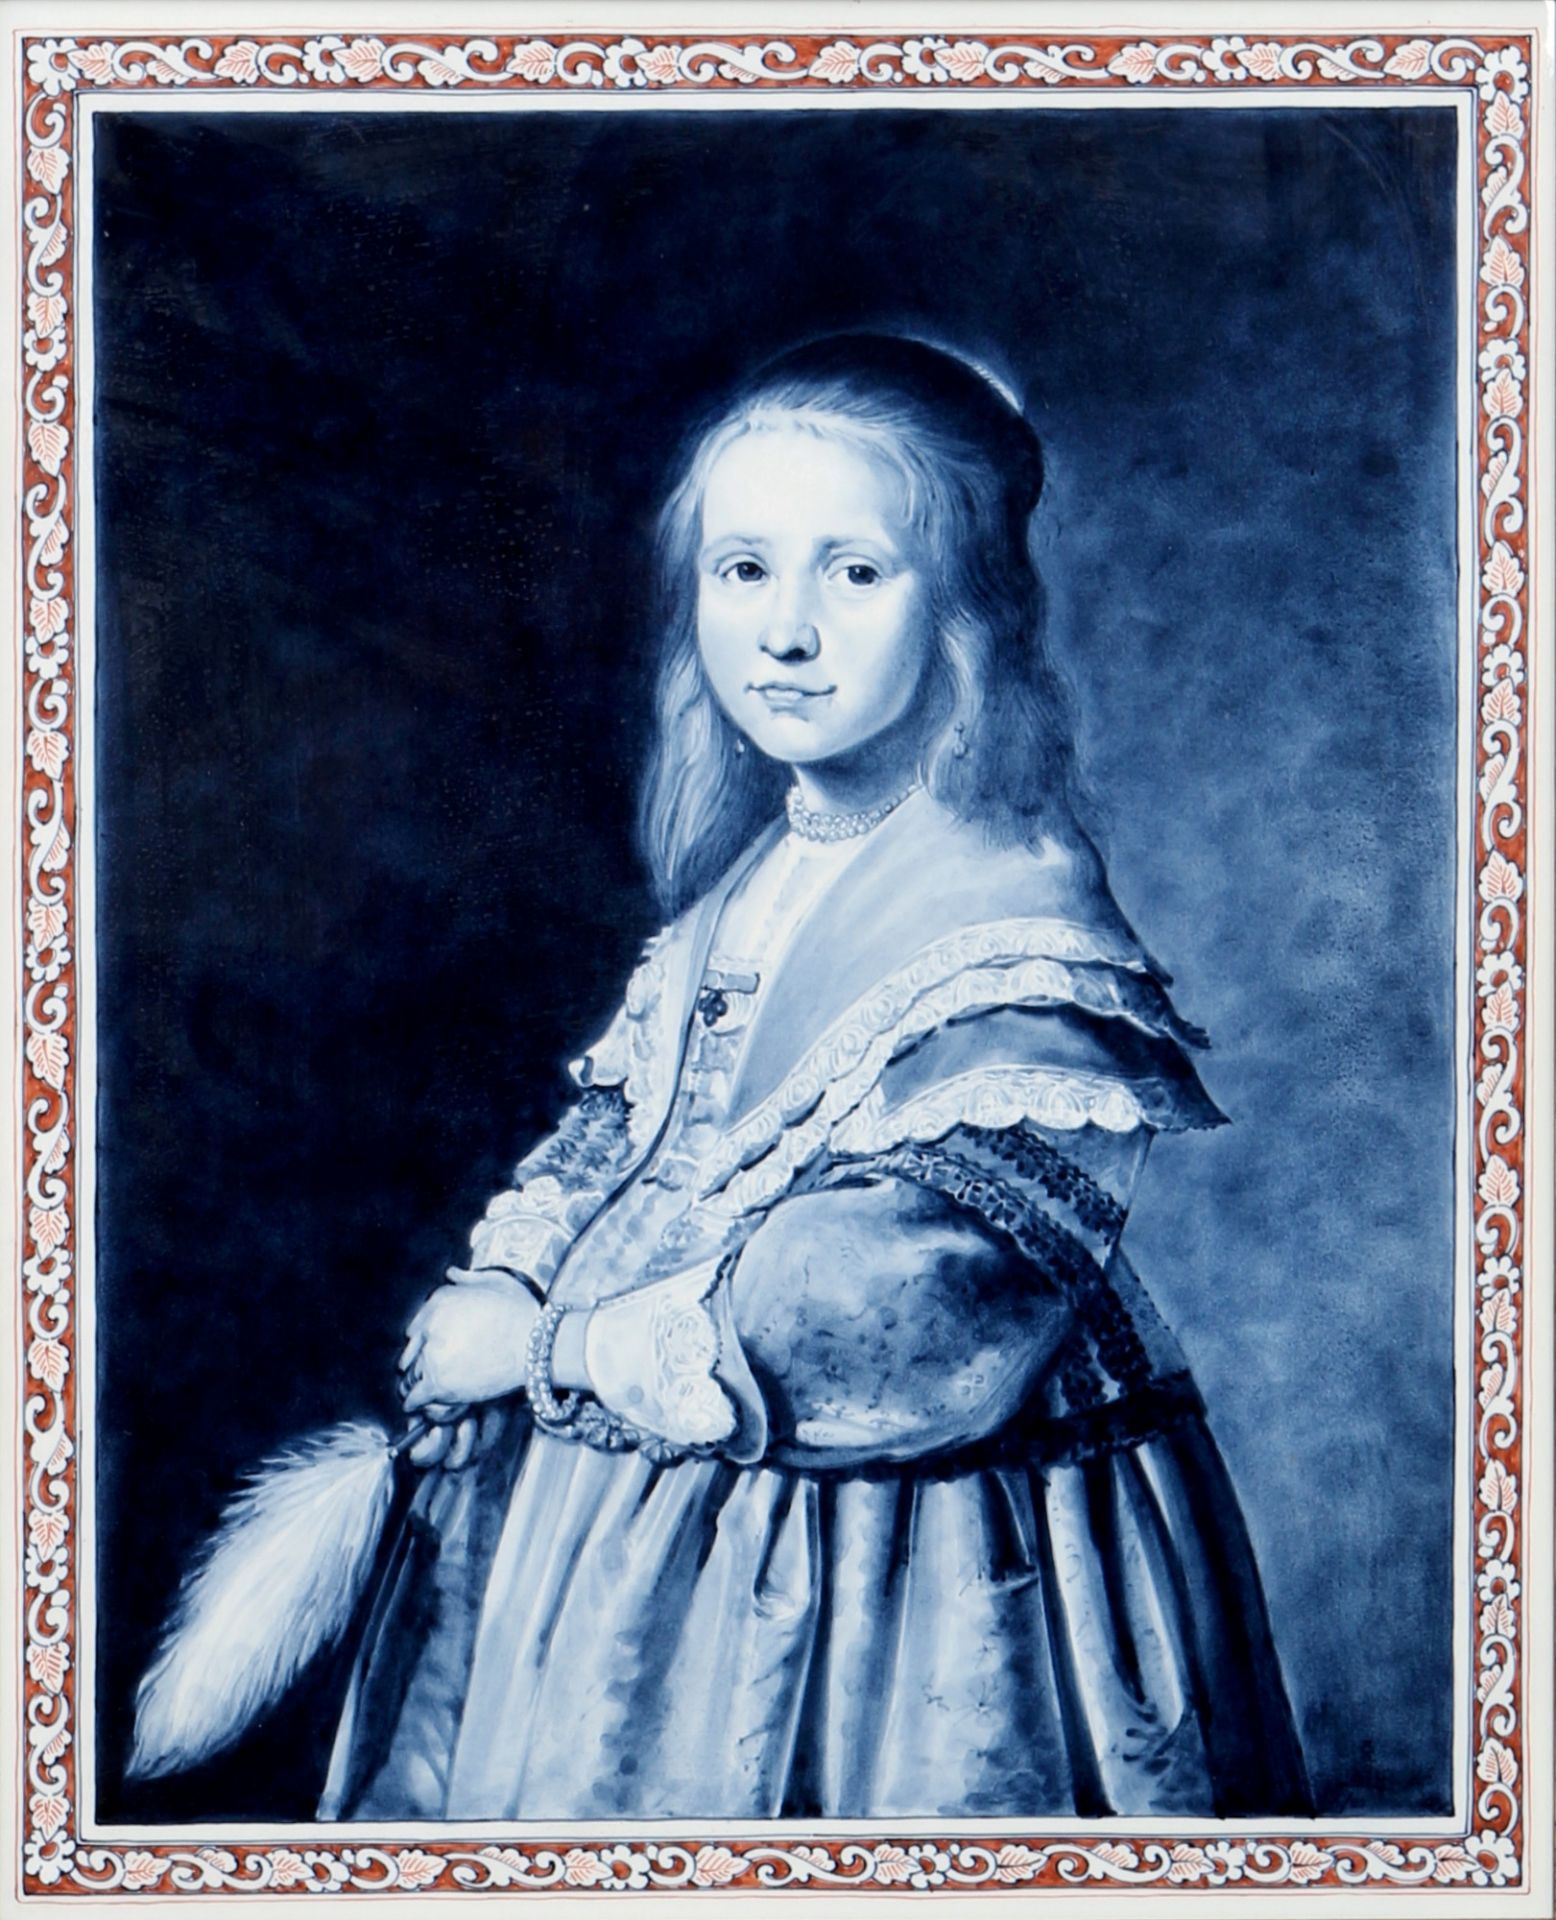 De Porceleyne Fles große Bildplatte Mädchen im blauen Kleid nach Jan Cornelisz VERSPRONCK (1597-1662